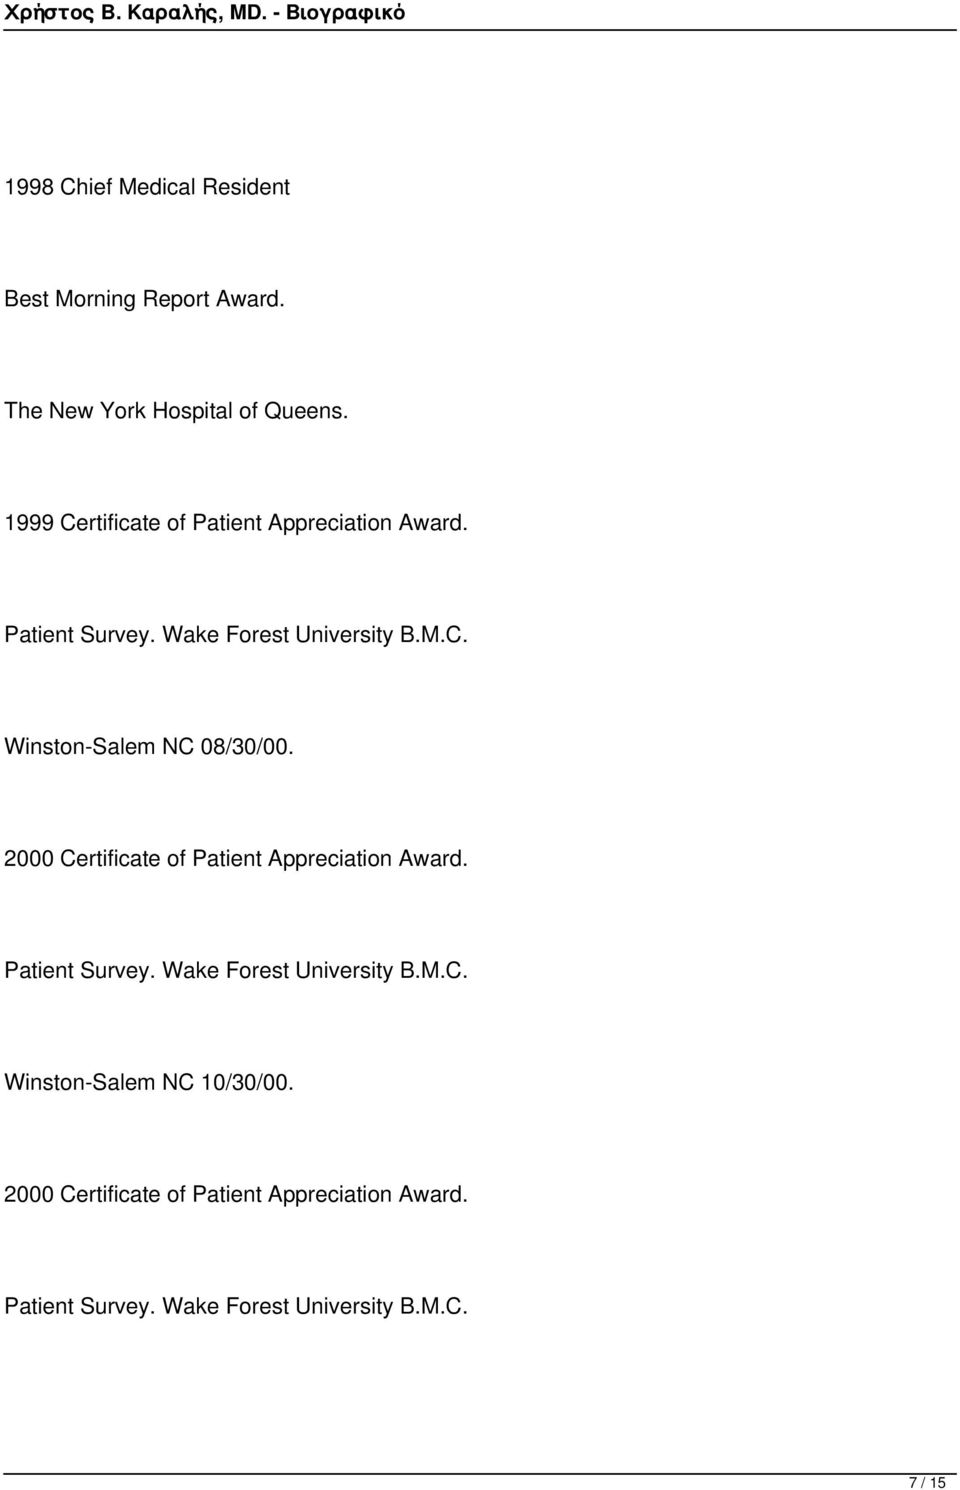 2000 Certificate of Patient Appreciation Award. Patient Survey. Wake Forest University B.M.C. Winston-Salem NC 10/30/00.